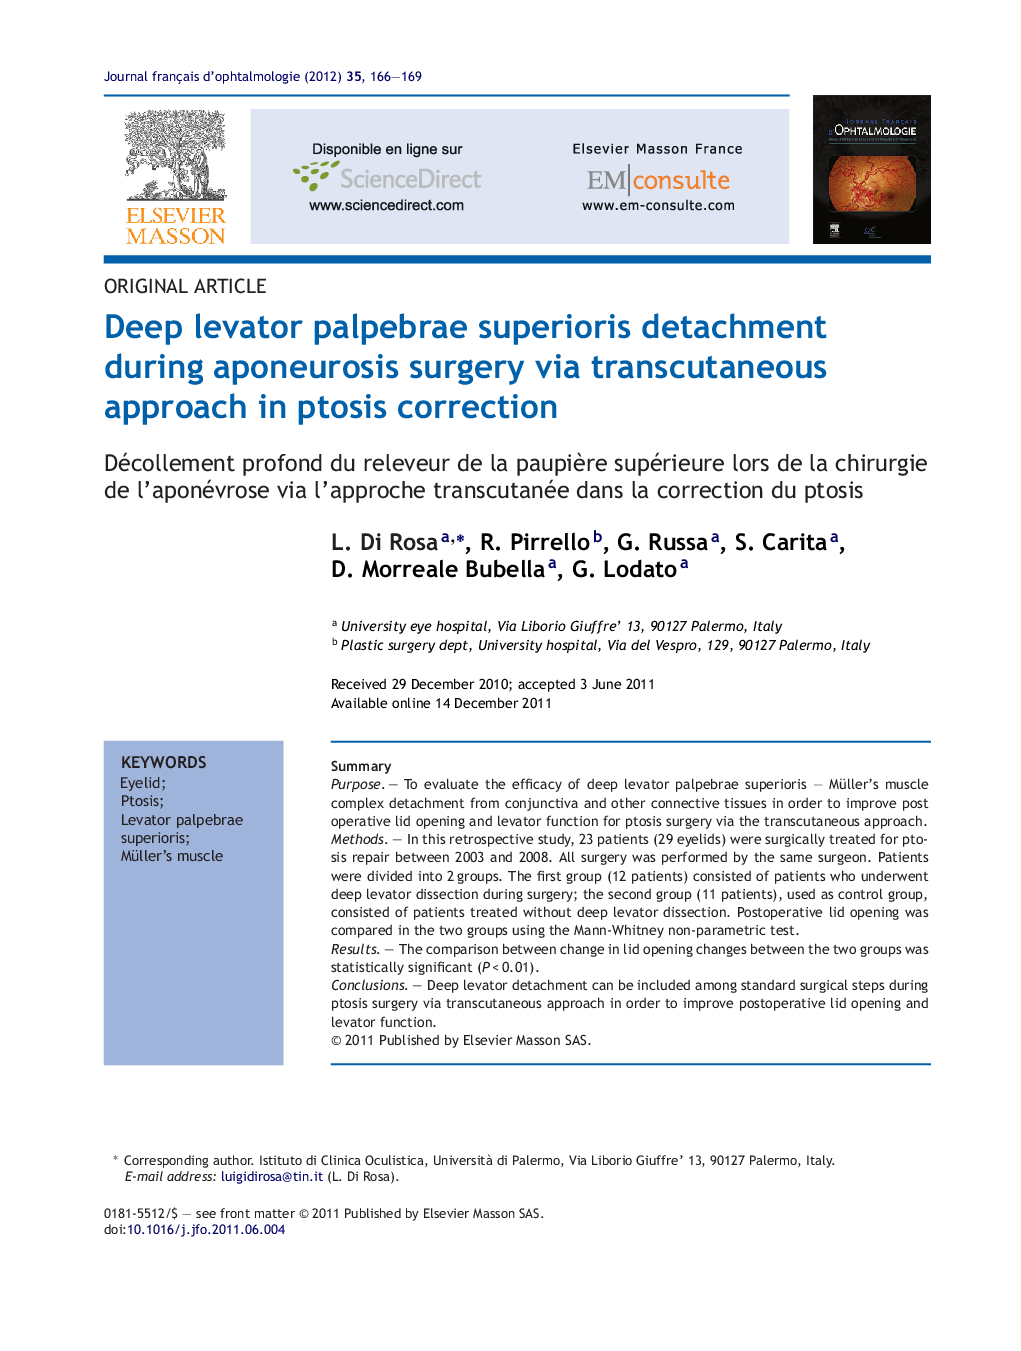 Deep levator palpebrae superioris detachment during aponeurosis surgery via transcutaneous approach in ptosis correction